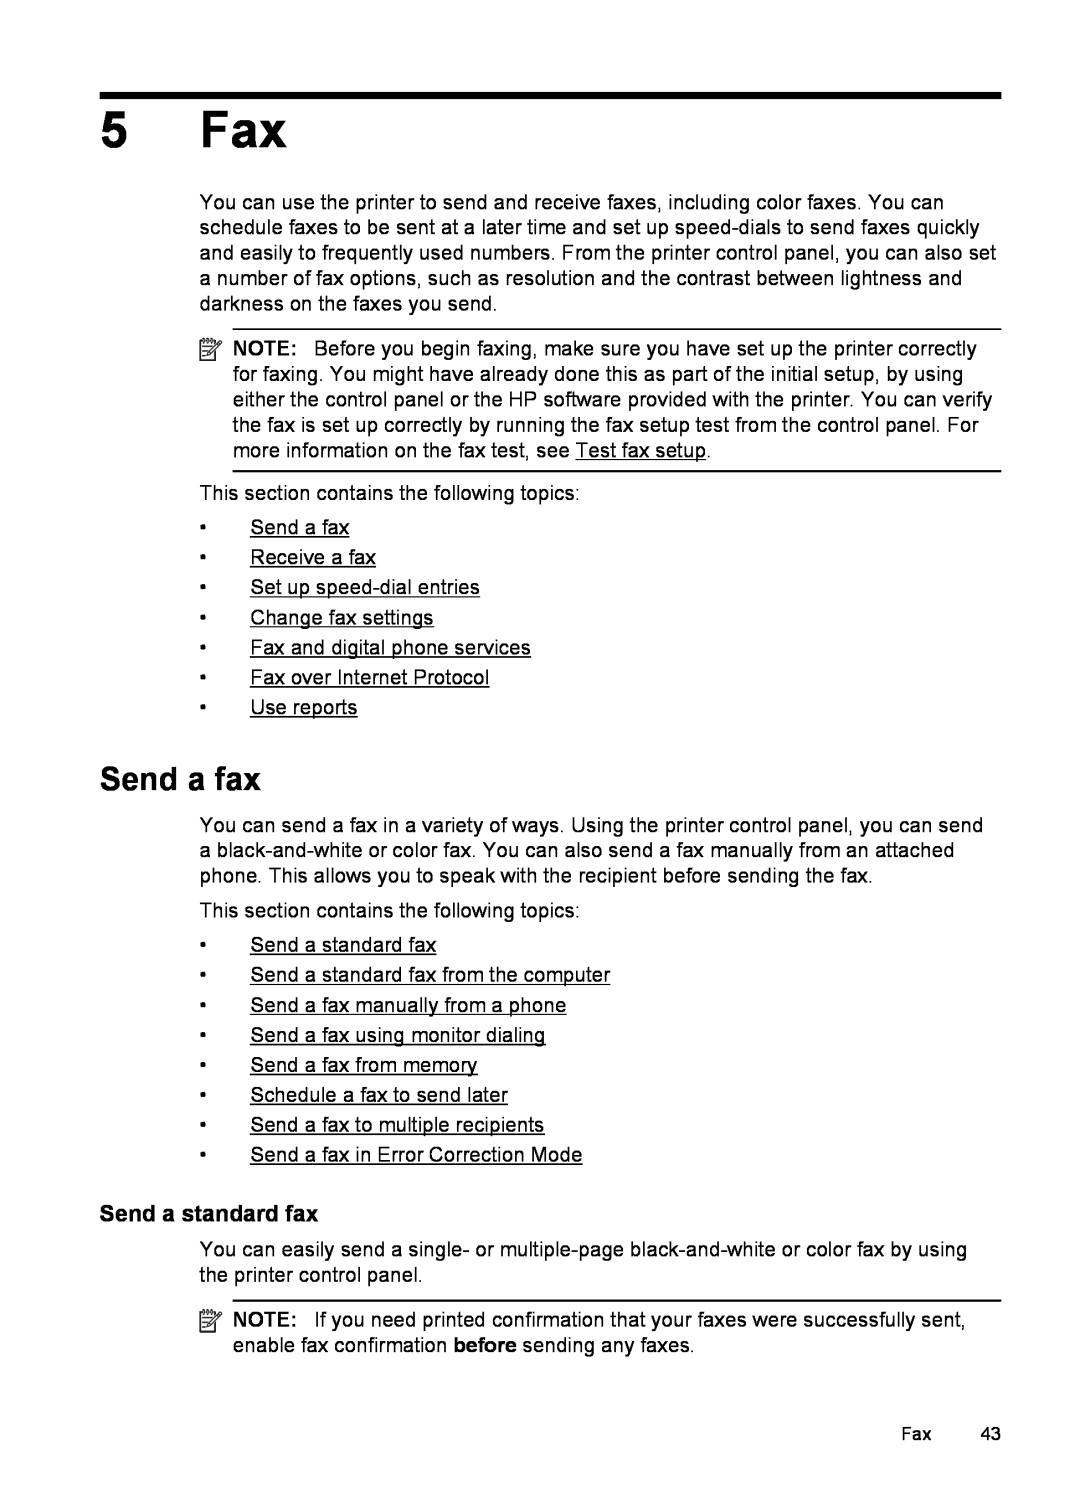 HP 6600 - H7 manual 5 Fax, Send a fax, Send a standard fax 